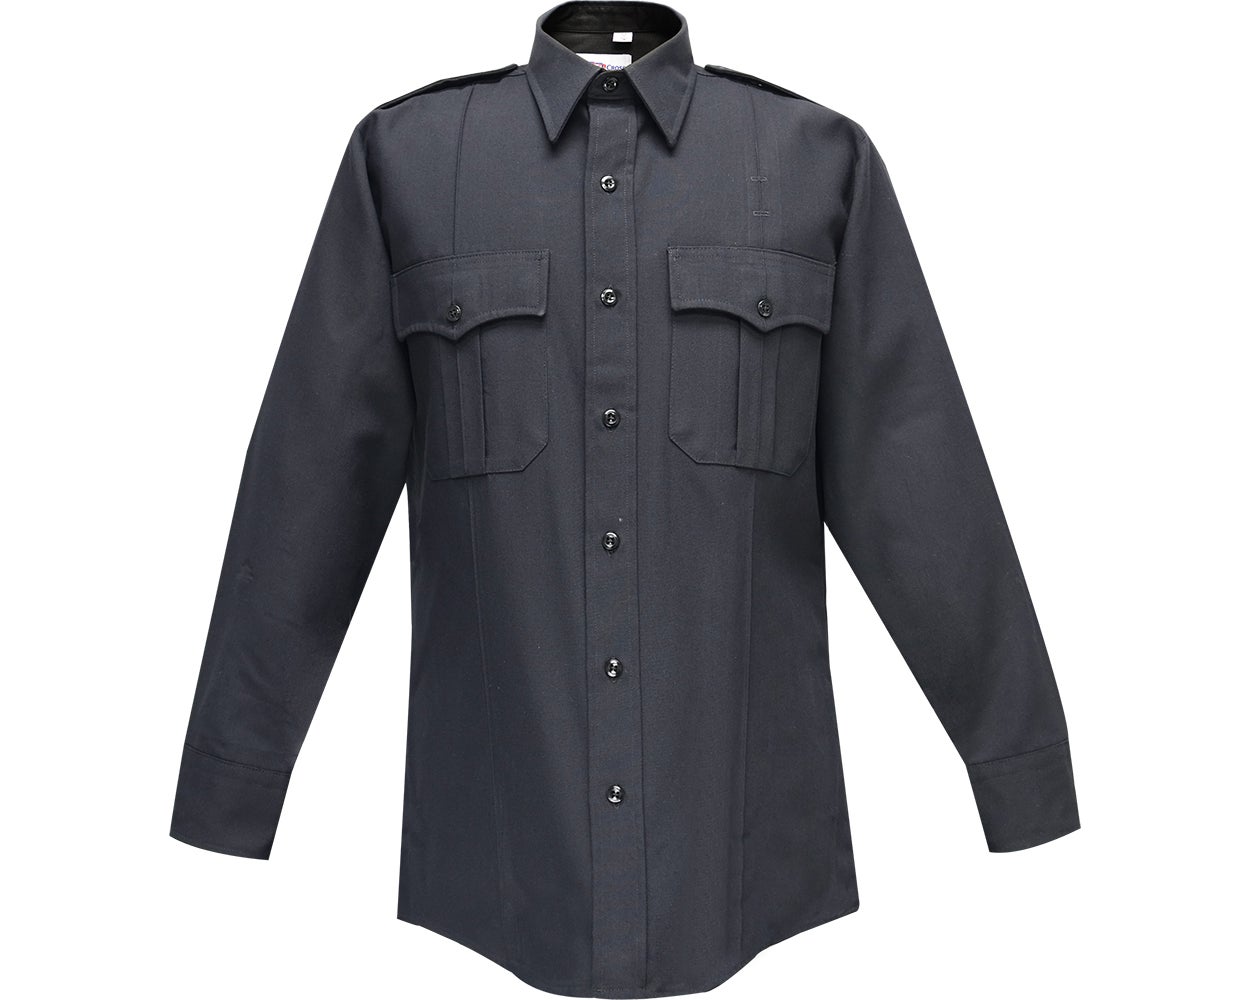 Flying Cross Men's Command 100% Polyester Long Sleeve Uniform Shirt 35W78 - LAPD Navy, 16.5 x 34-35